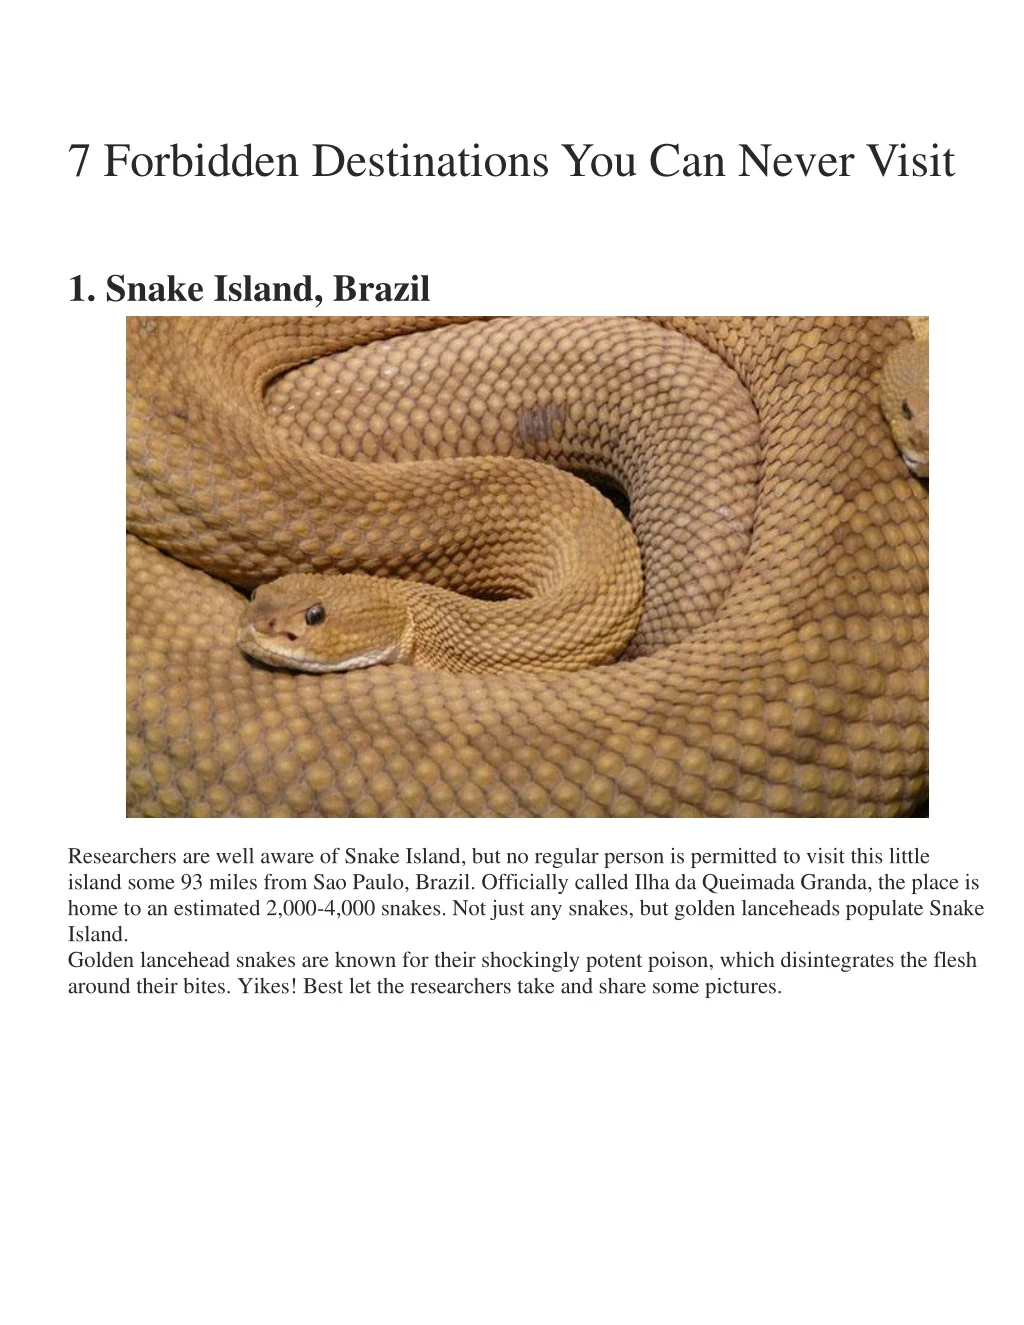 7 forbidden destinations you can never visit